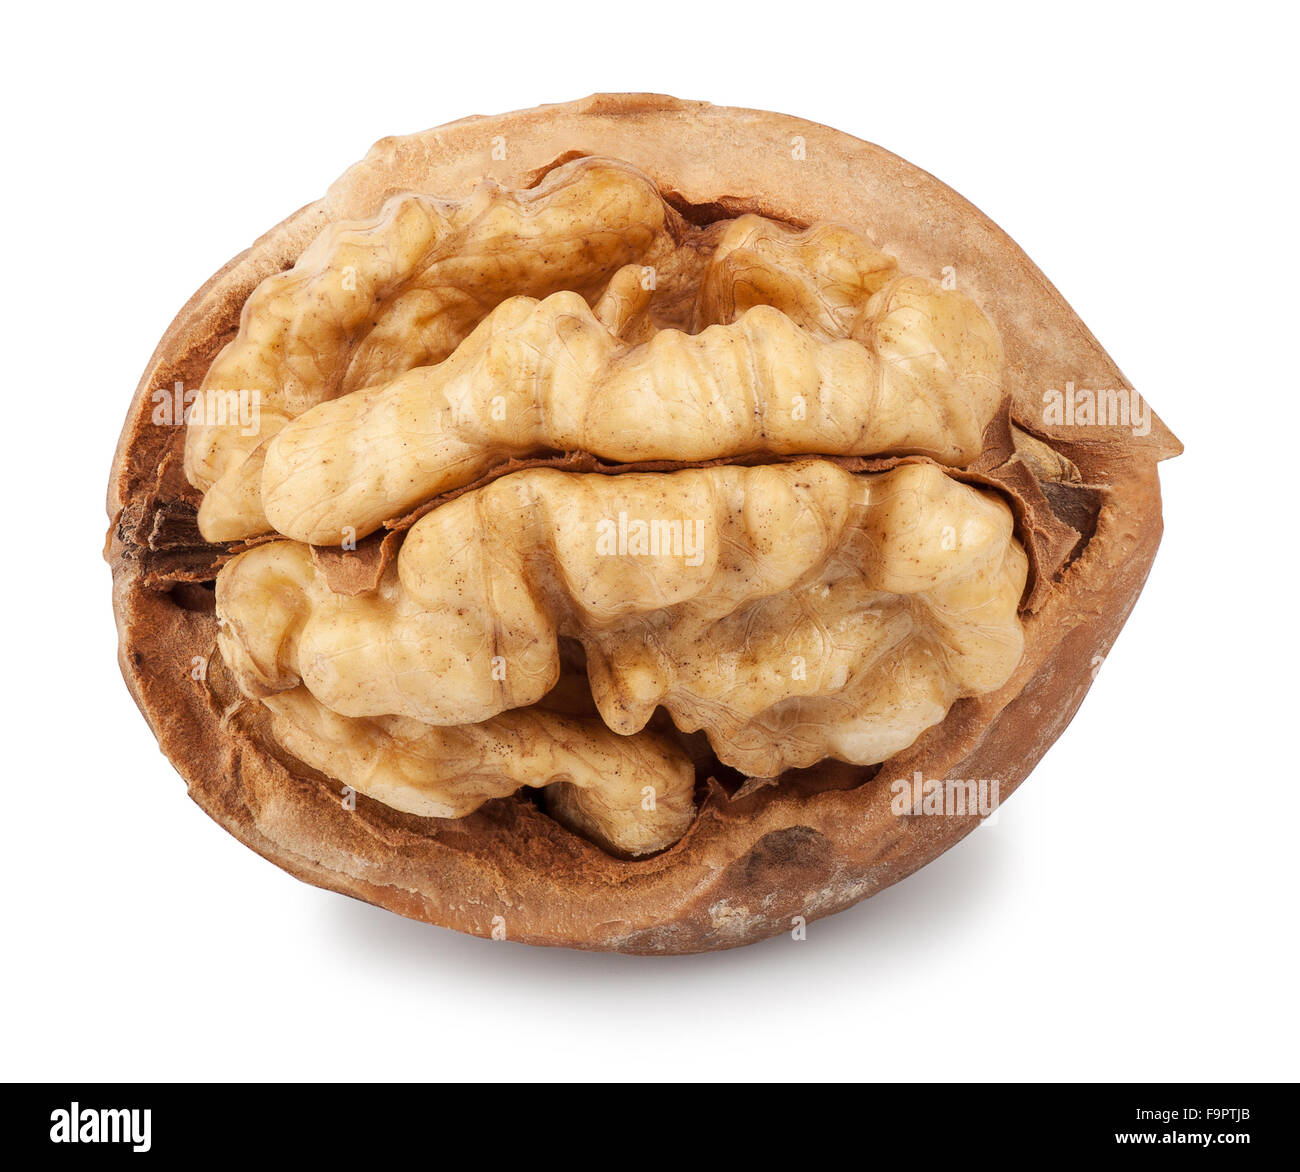 half walnut isolate on a white background Stock Photo